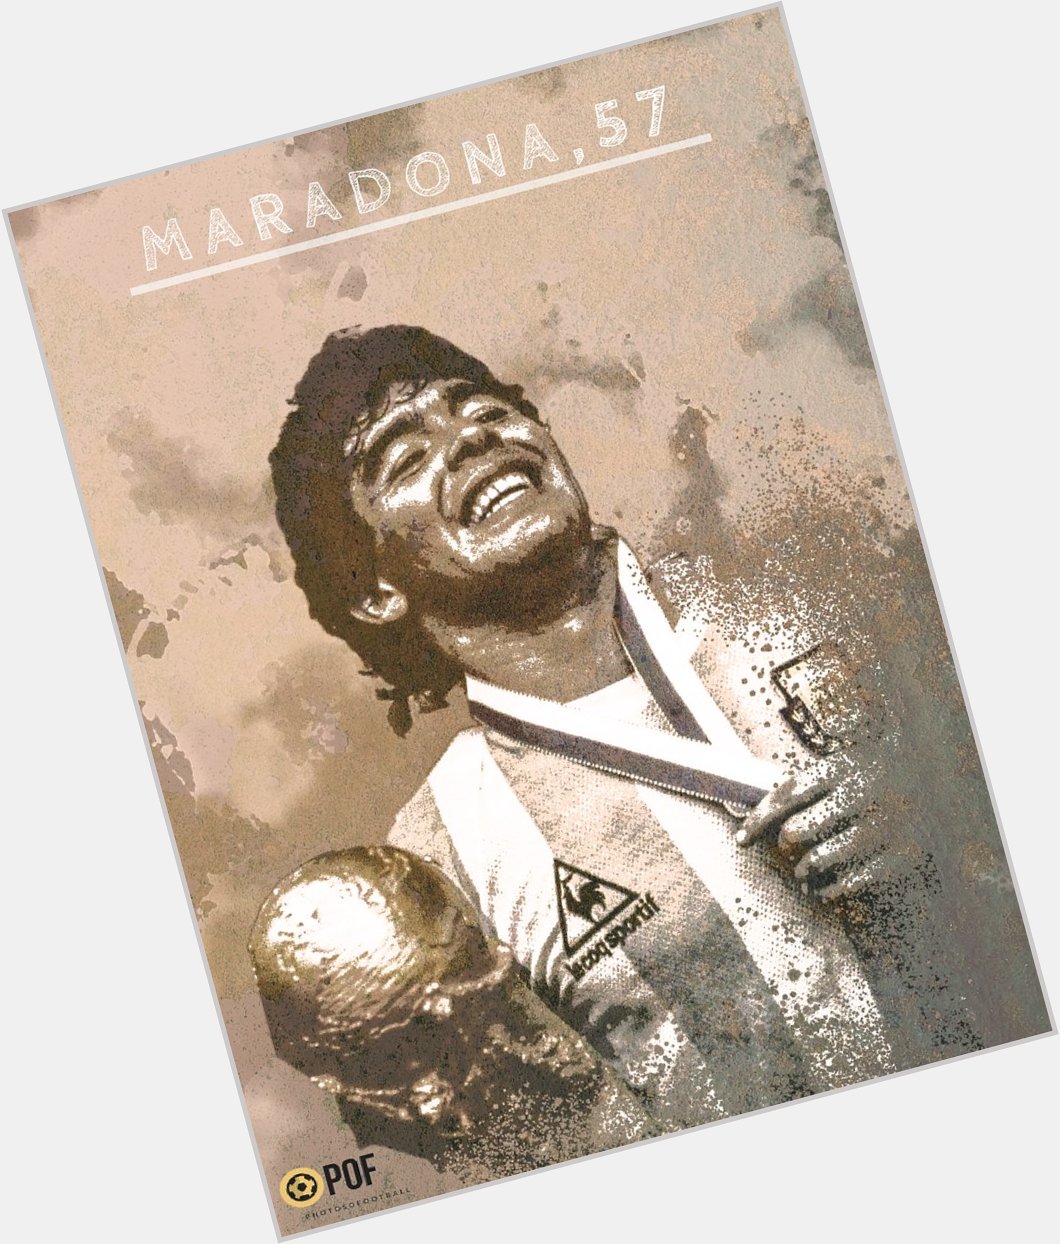 Happy 57th birthday, Diego Maradona! 